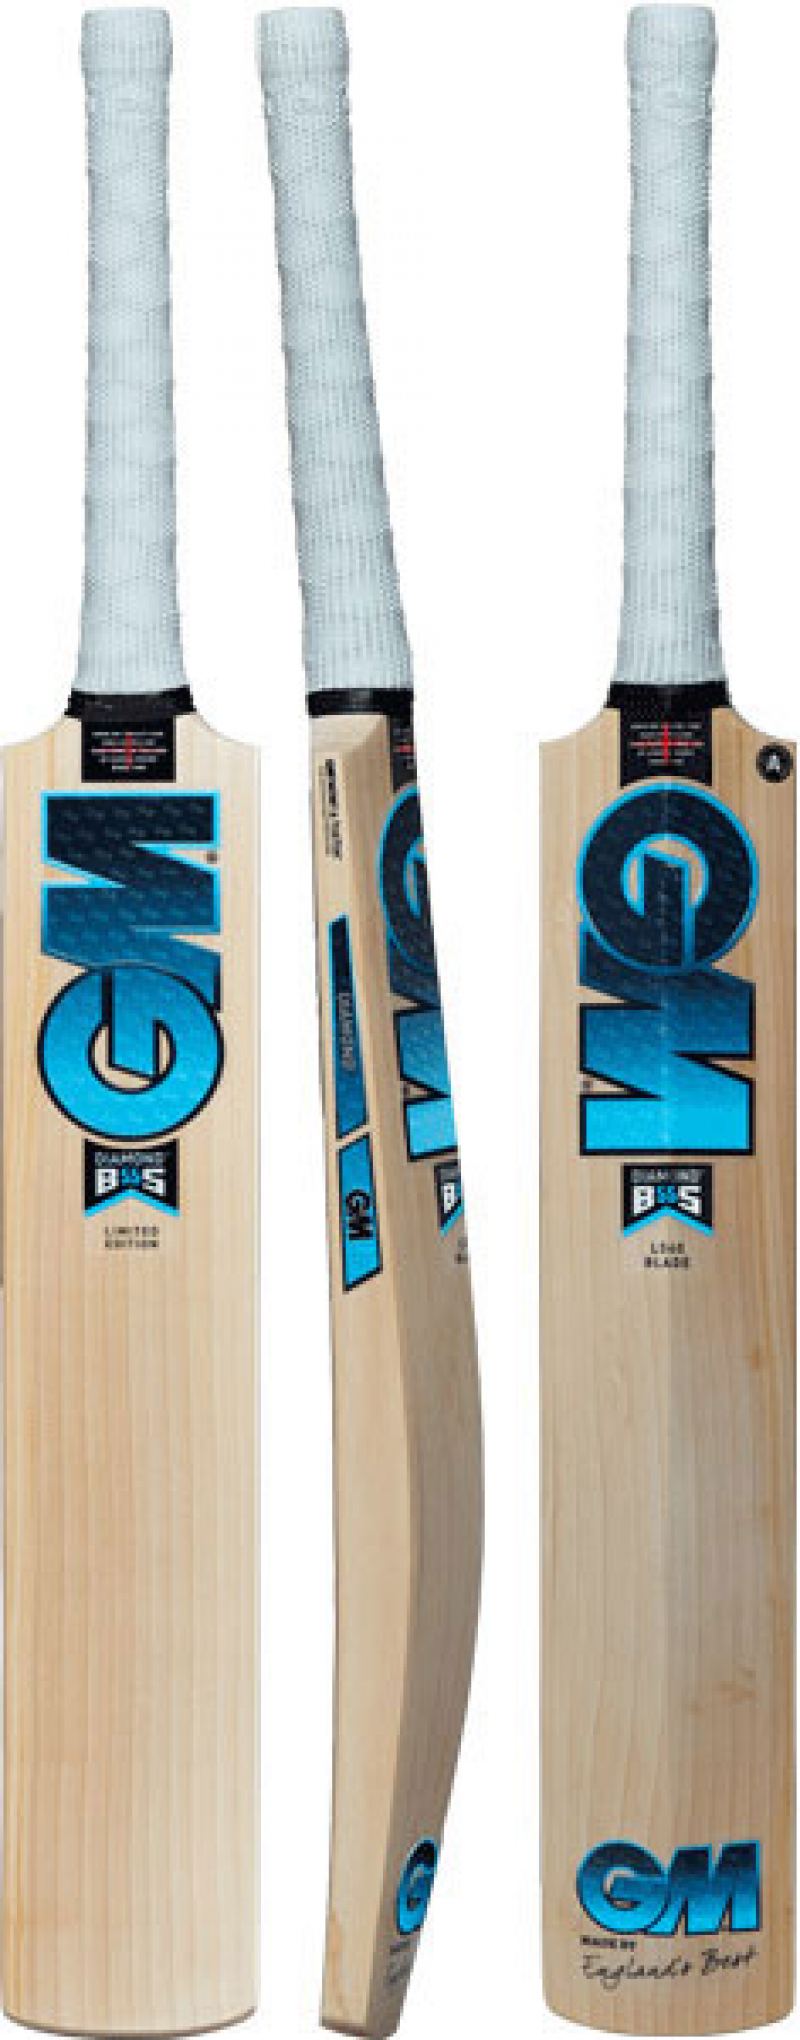 Gunn and Moore Diamond L540 DXM 909 Cricket Bat